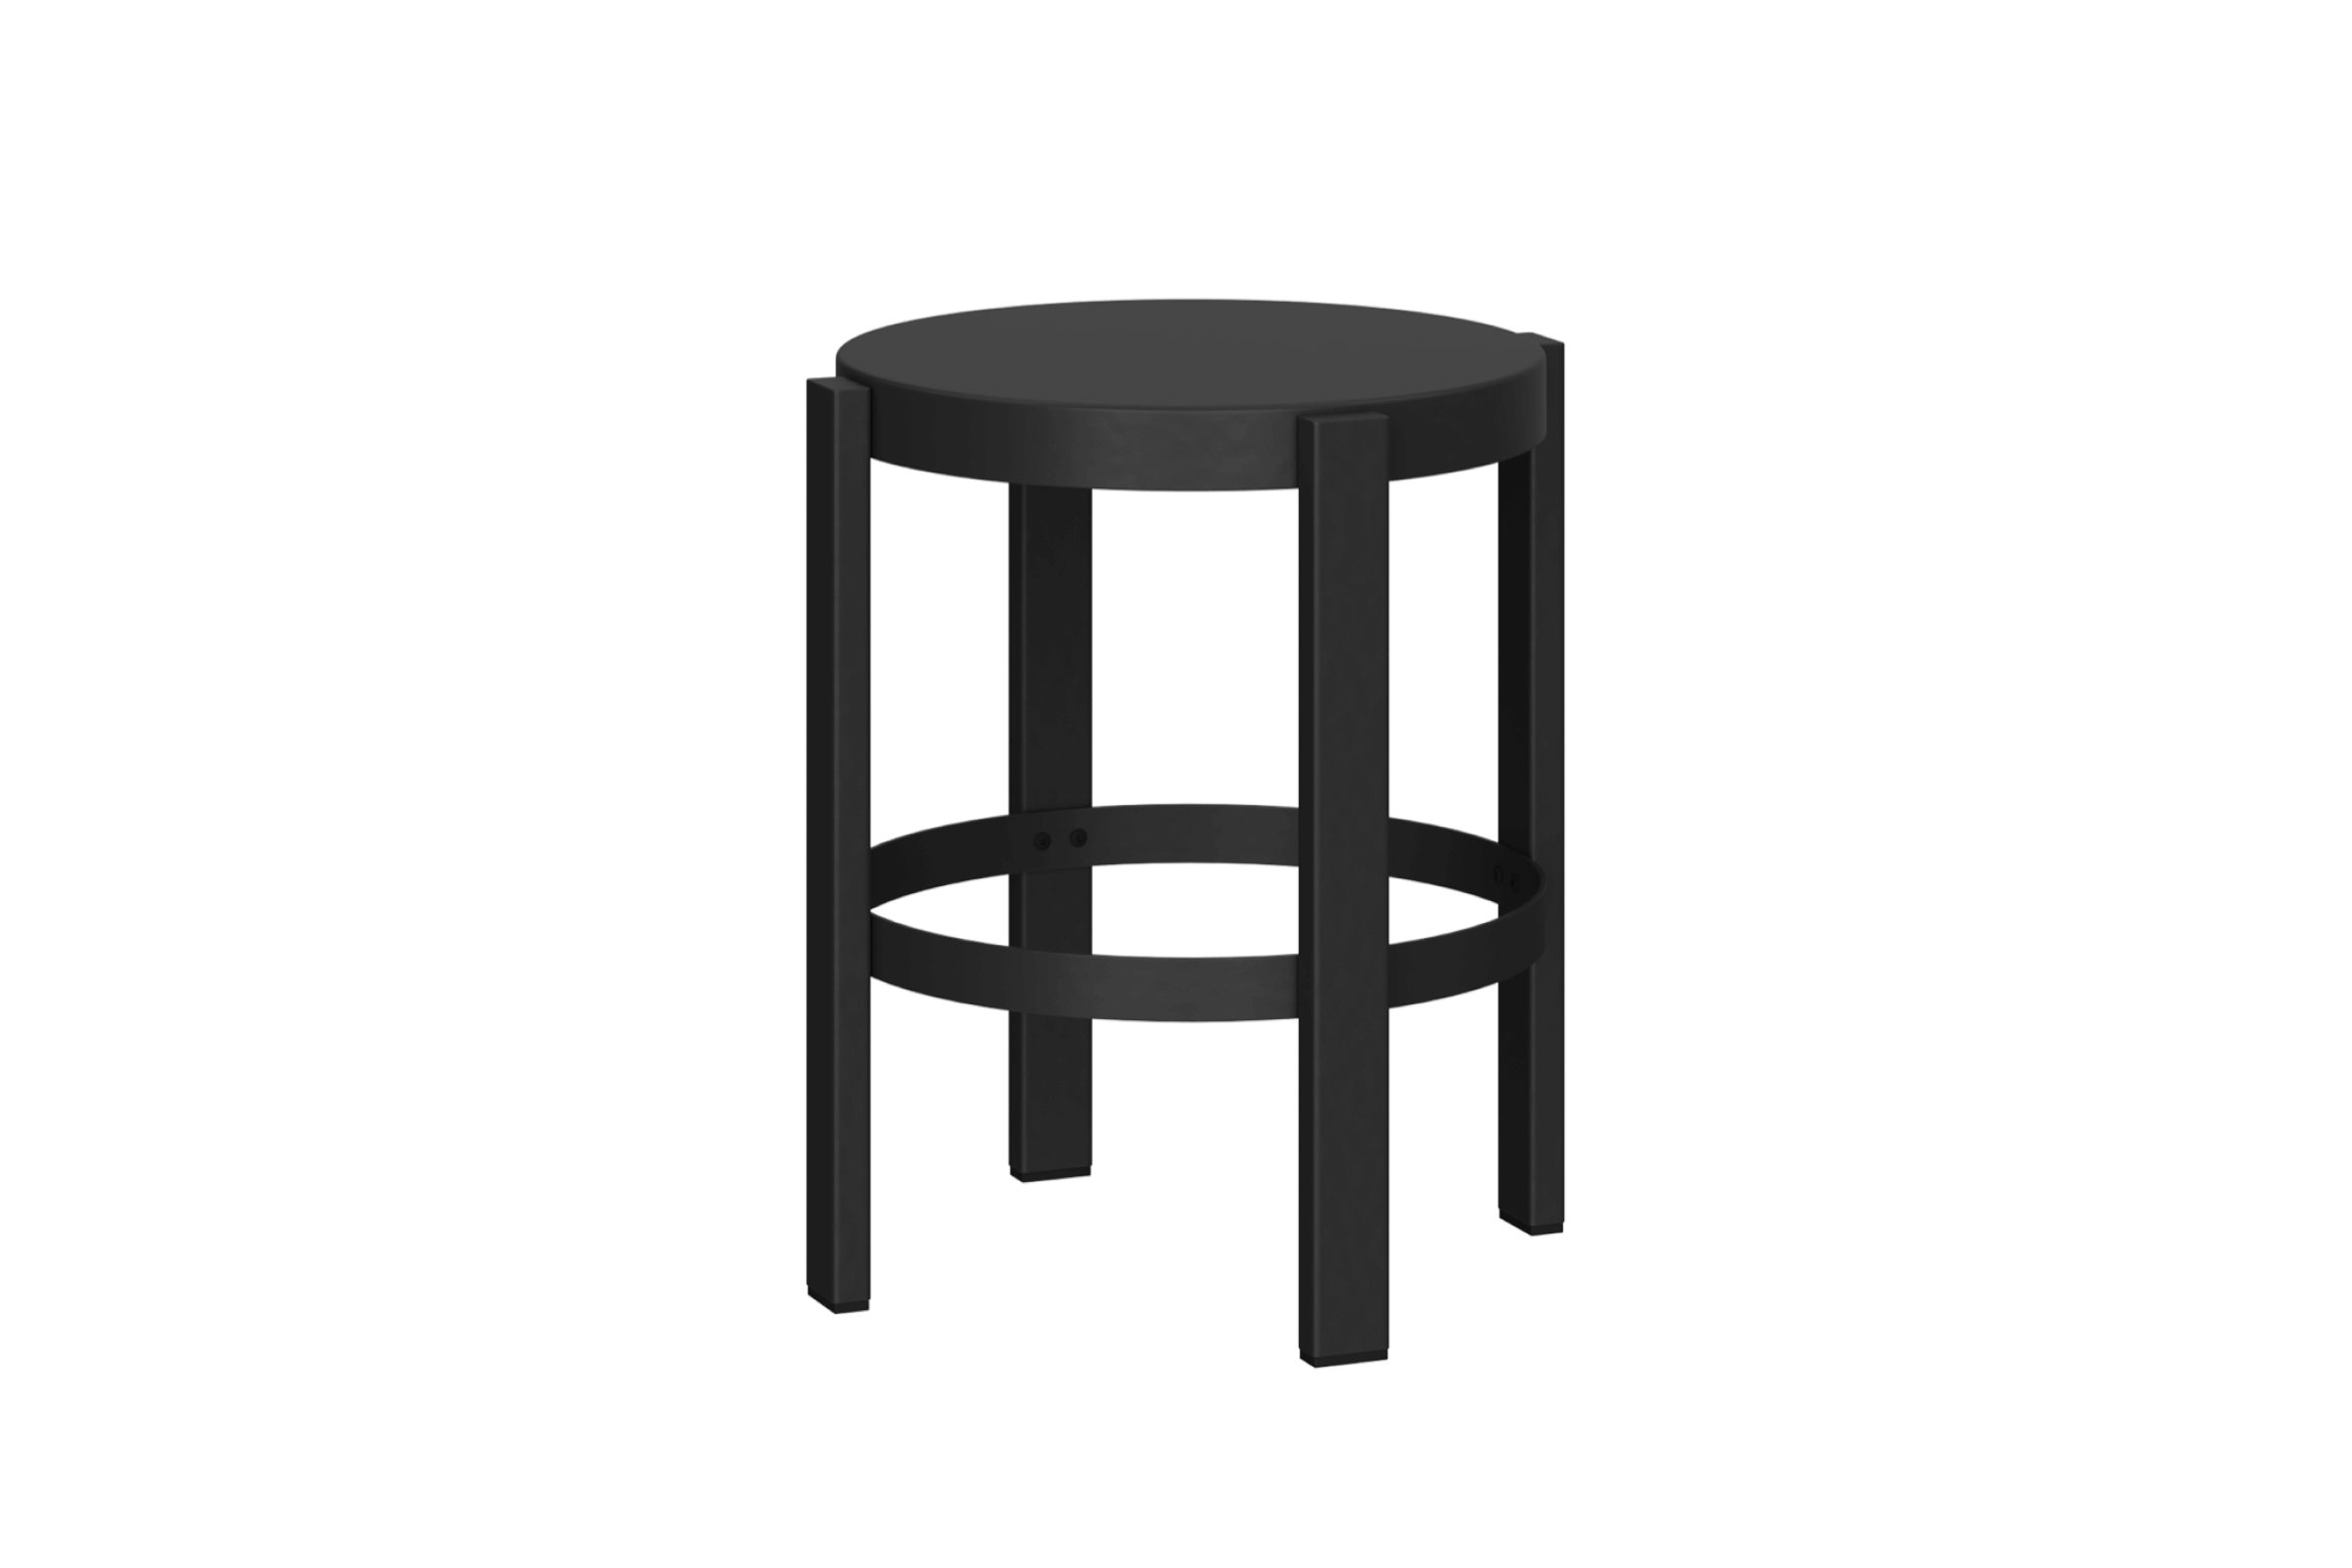 Modern & handy stool chairs | minimal & functional design - noo.ma